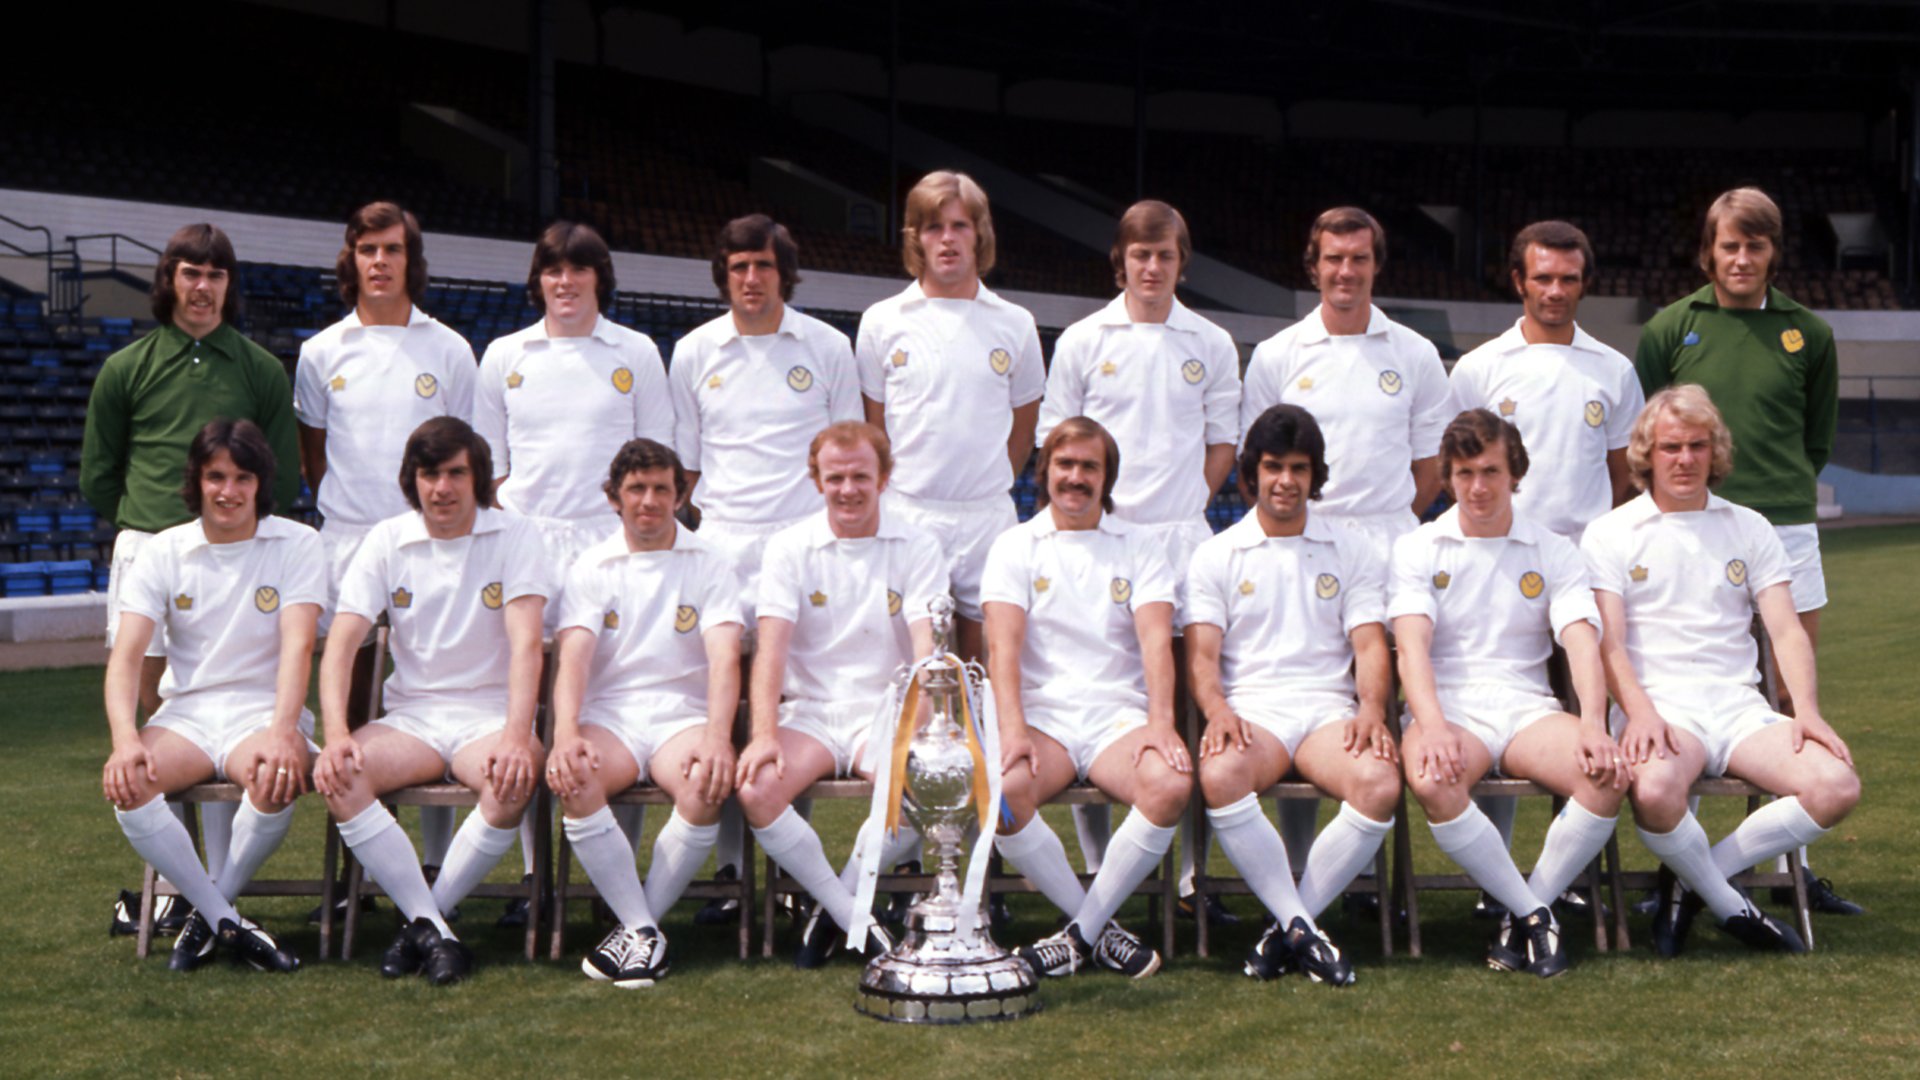 لیدزیونایتد-Leeds United 1973/74